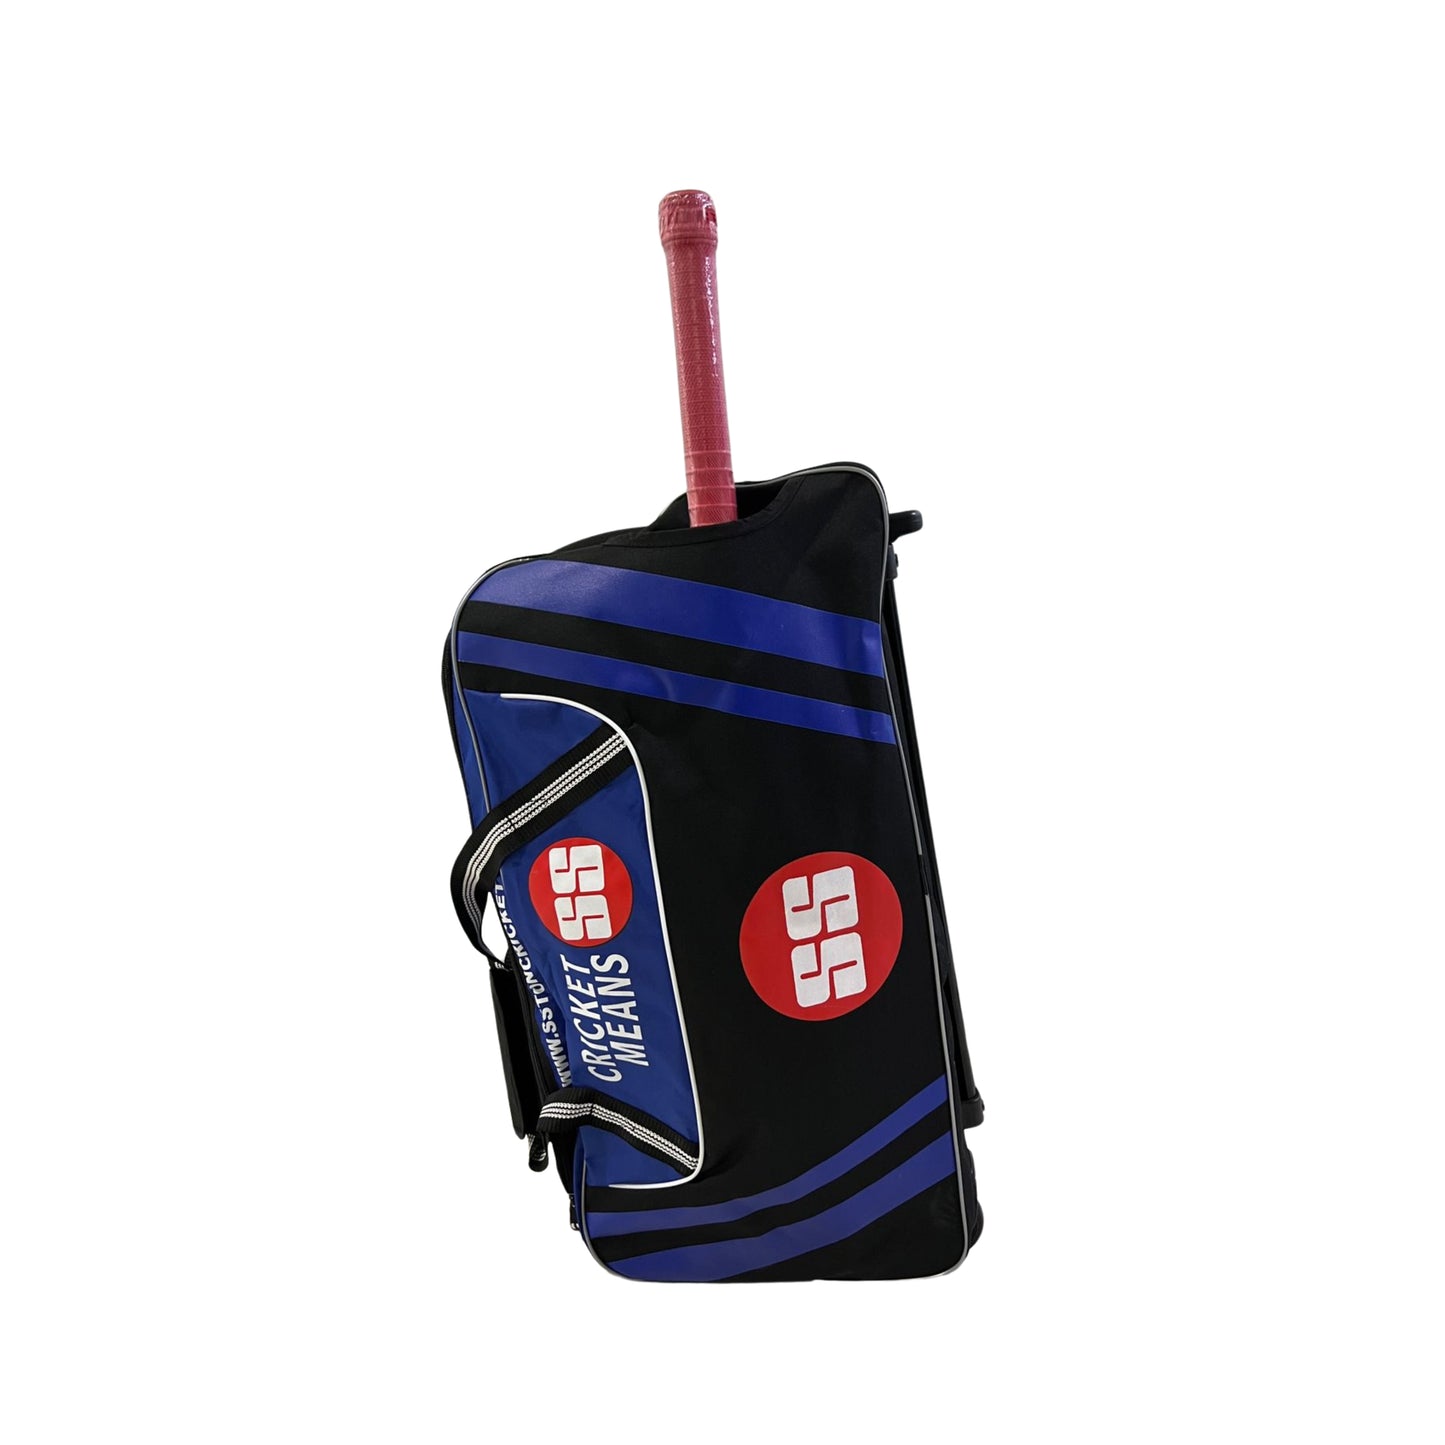 SS Slasher Colt Junior Cricket Kit Bag with wheels